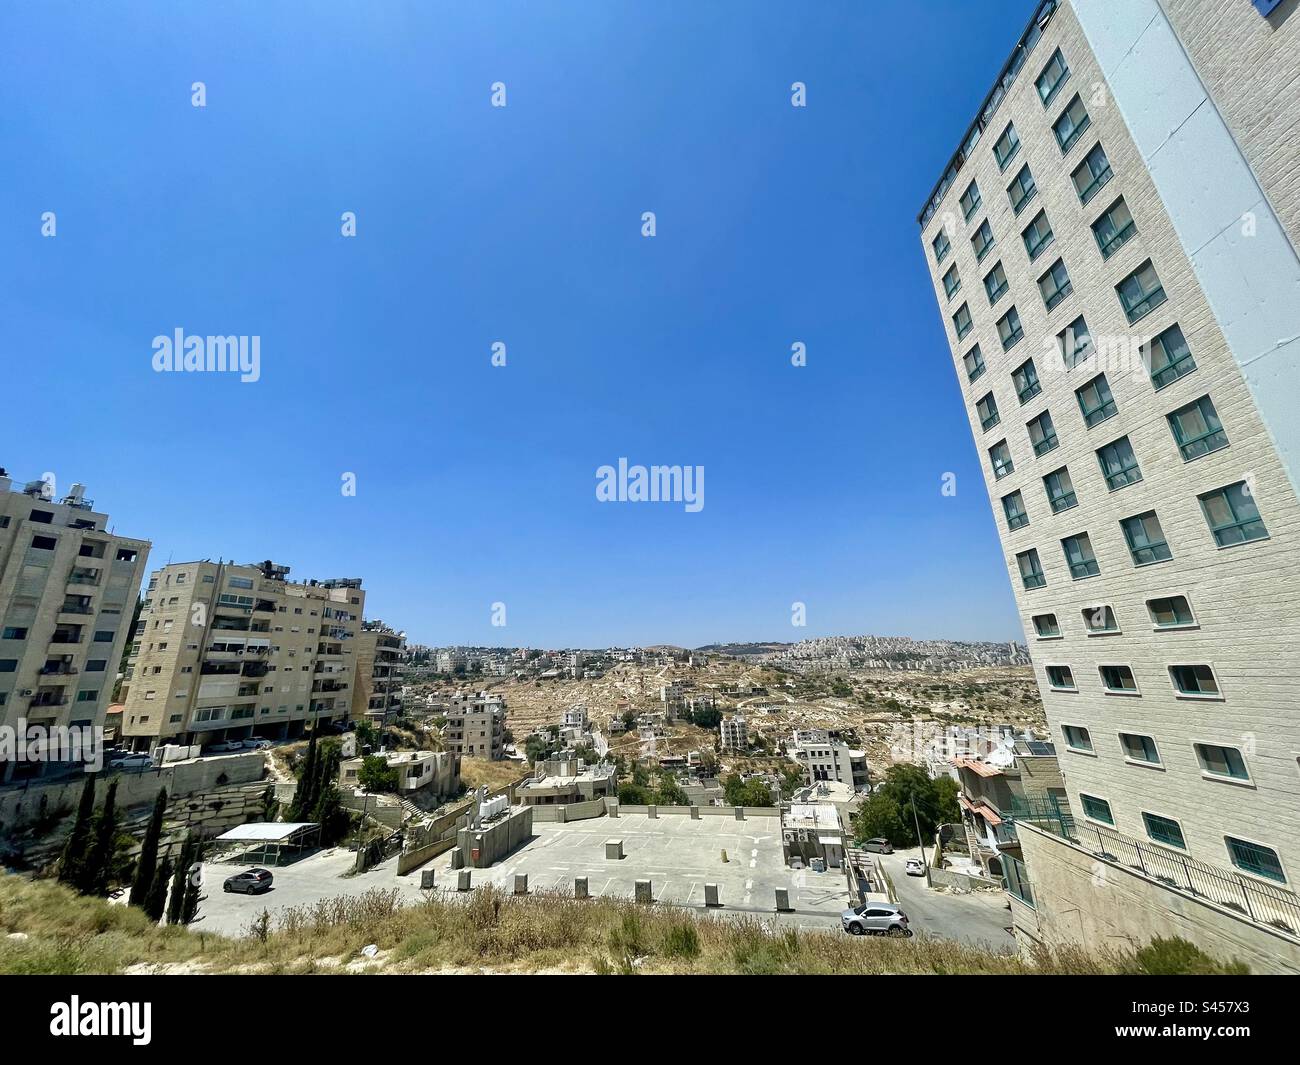 La città palestinese di Beit Sahur, vicino a Betlemme, in Palestina. Foto Stock